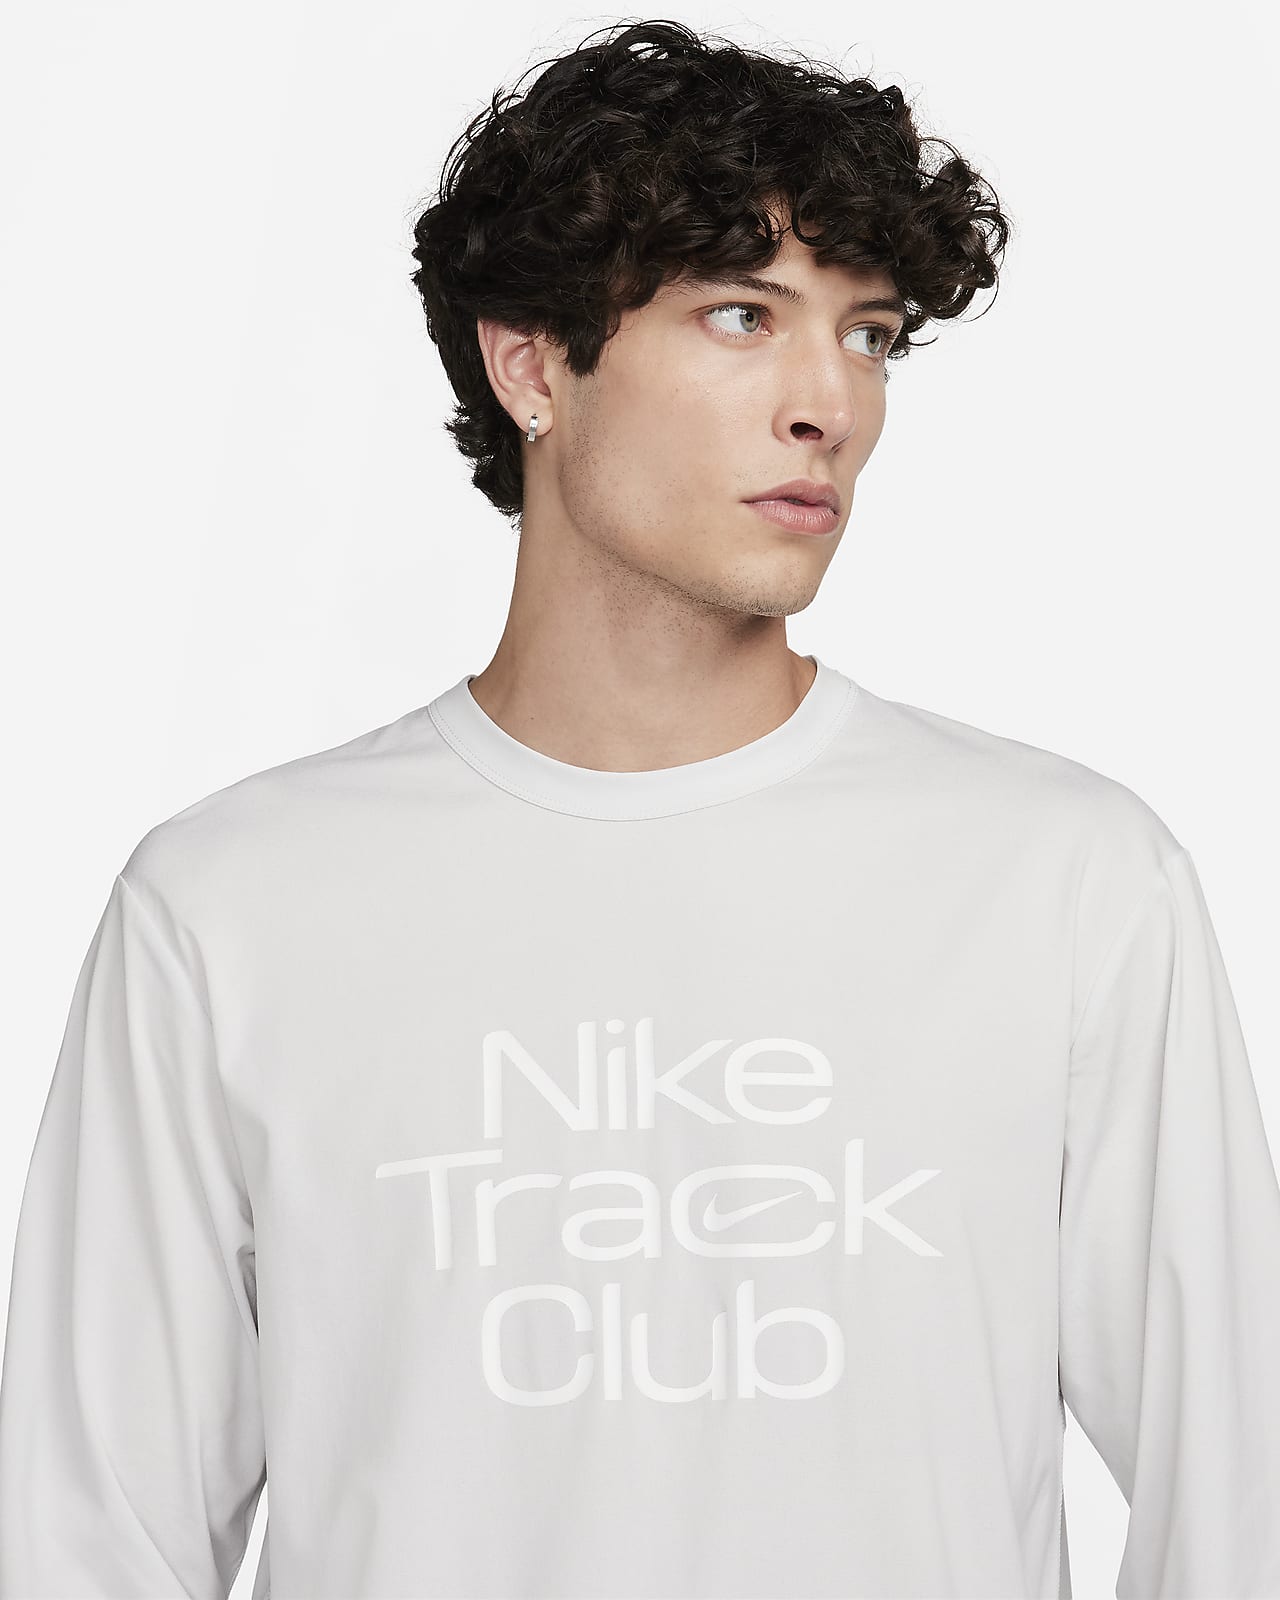 Nike Track Club Men's Dri-FIT Hyverse Long-Sleeve Running Top. Nike LU